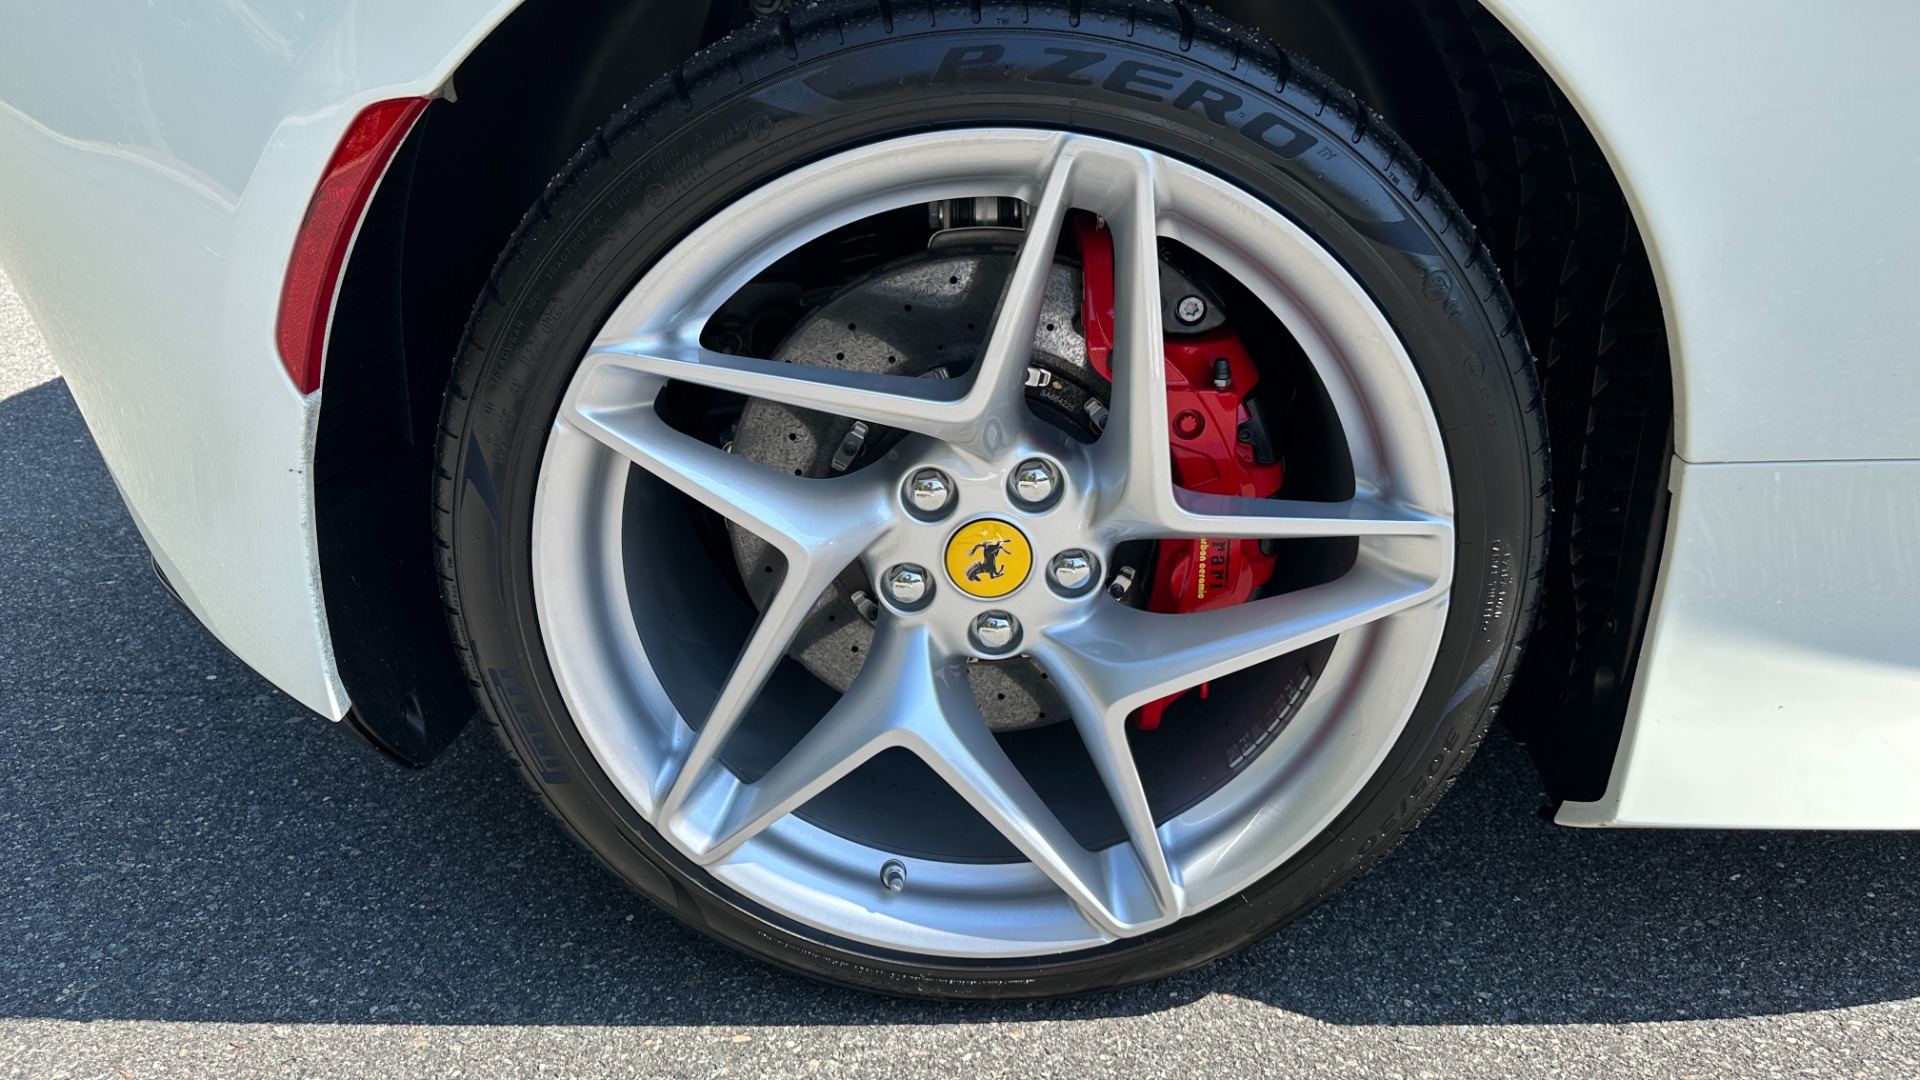 Ferrari F8 Spider Wrap top to satin black with custom livery + windscreen  Protection Film #ferrari #ferrarimalaysia…